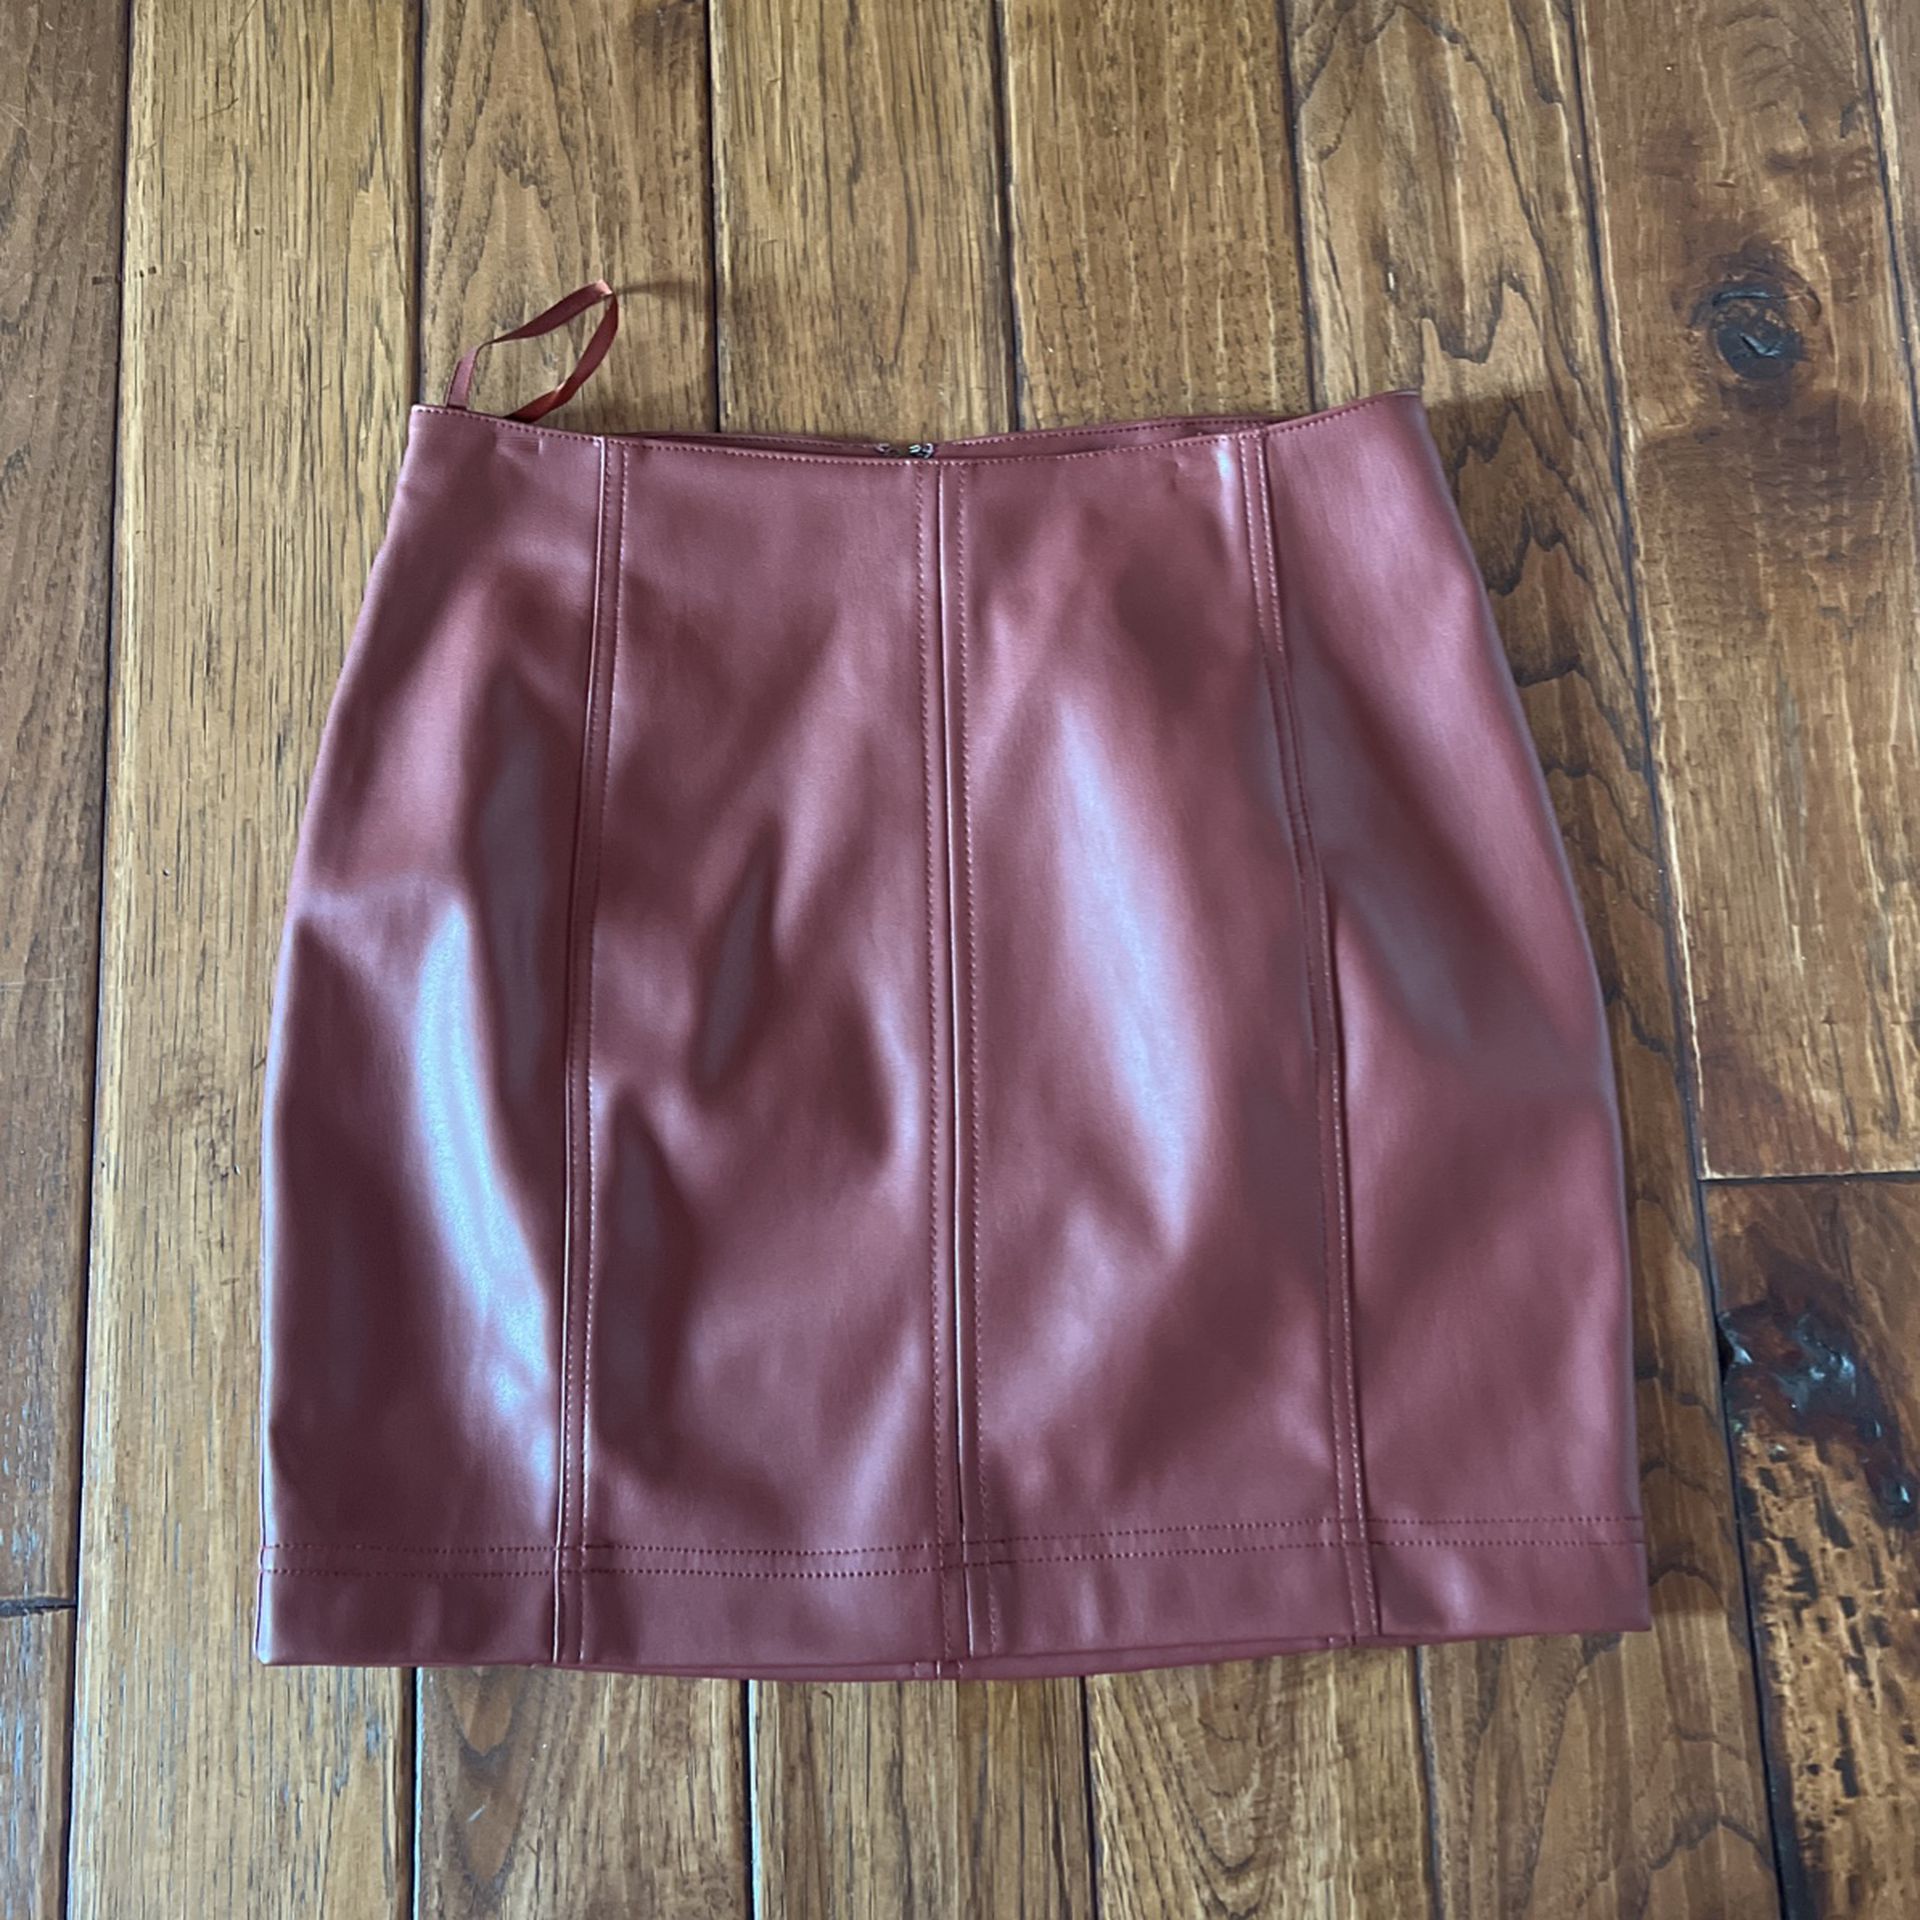 Brown Pencil Skirt 